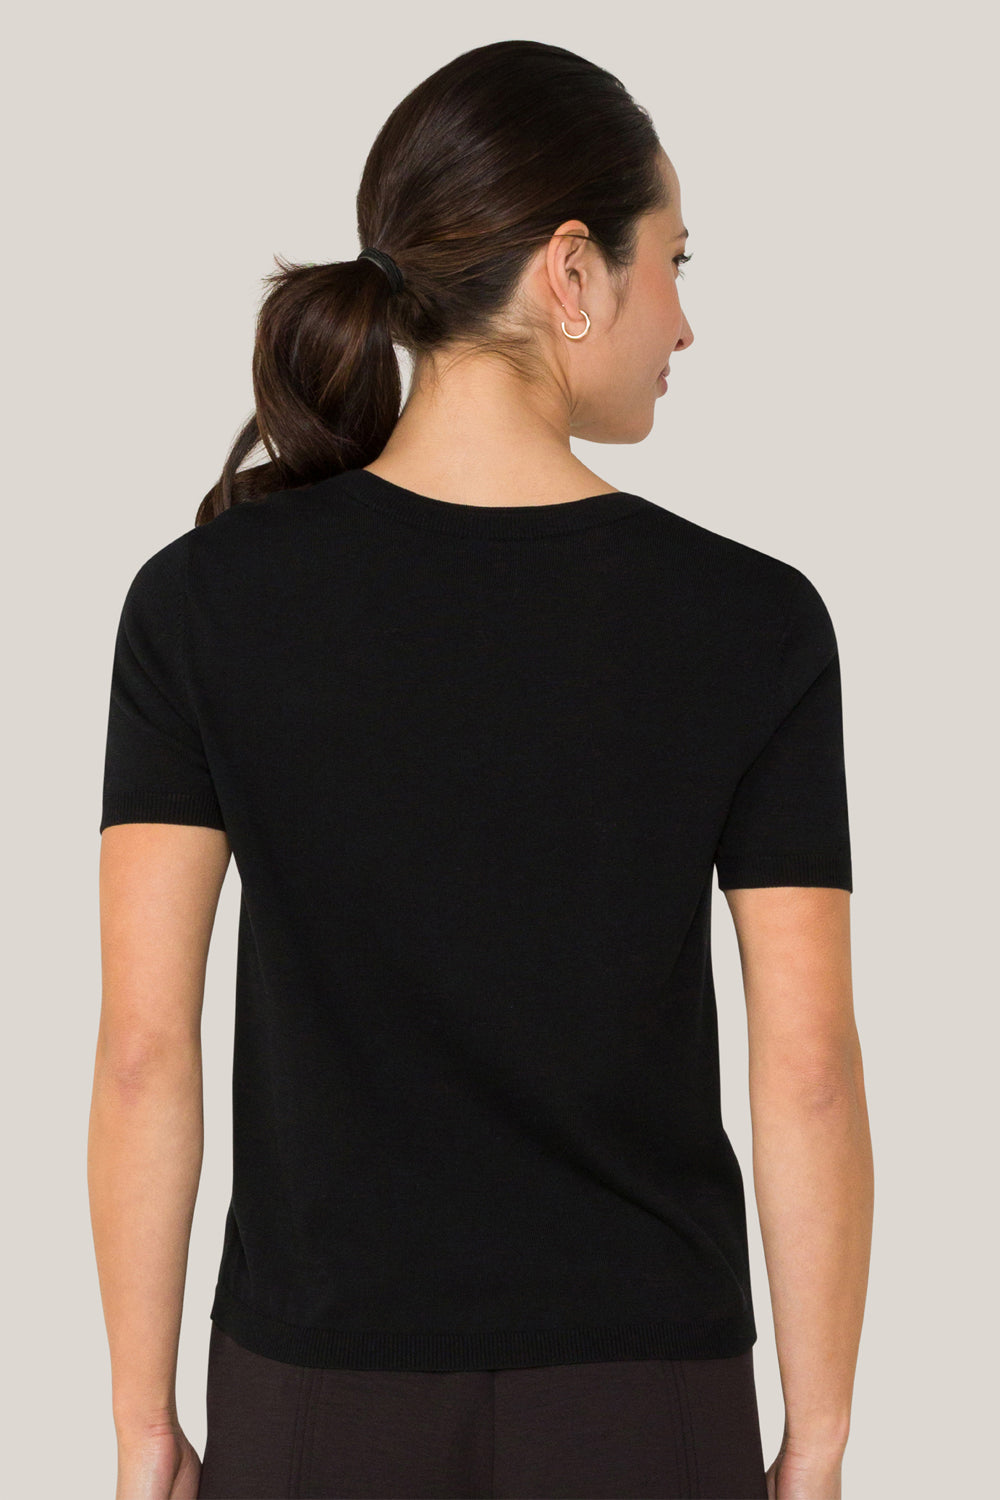 Alala women's knit v-neck t-shirt in black